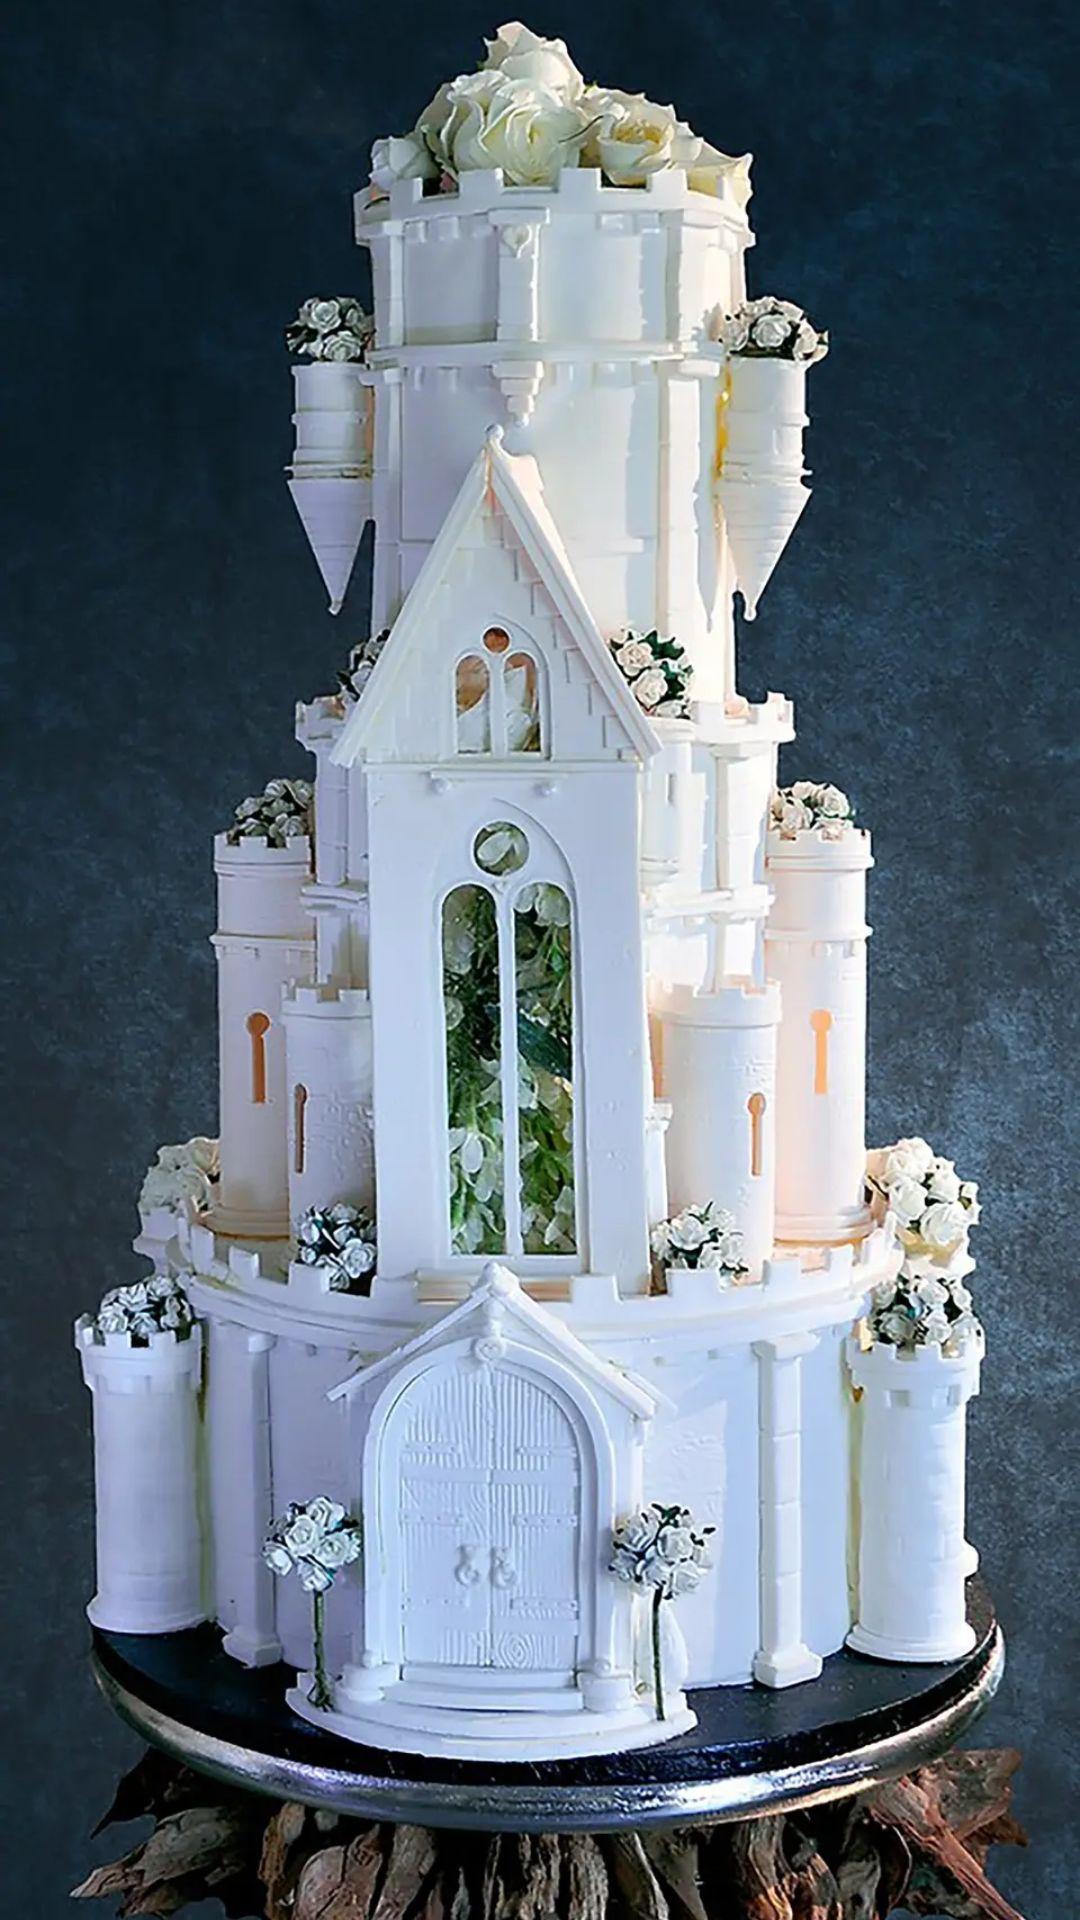 This Fairytale Wedding Cake Looks Like a Castle